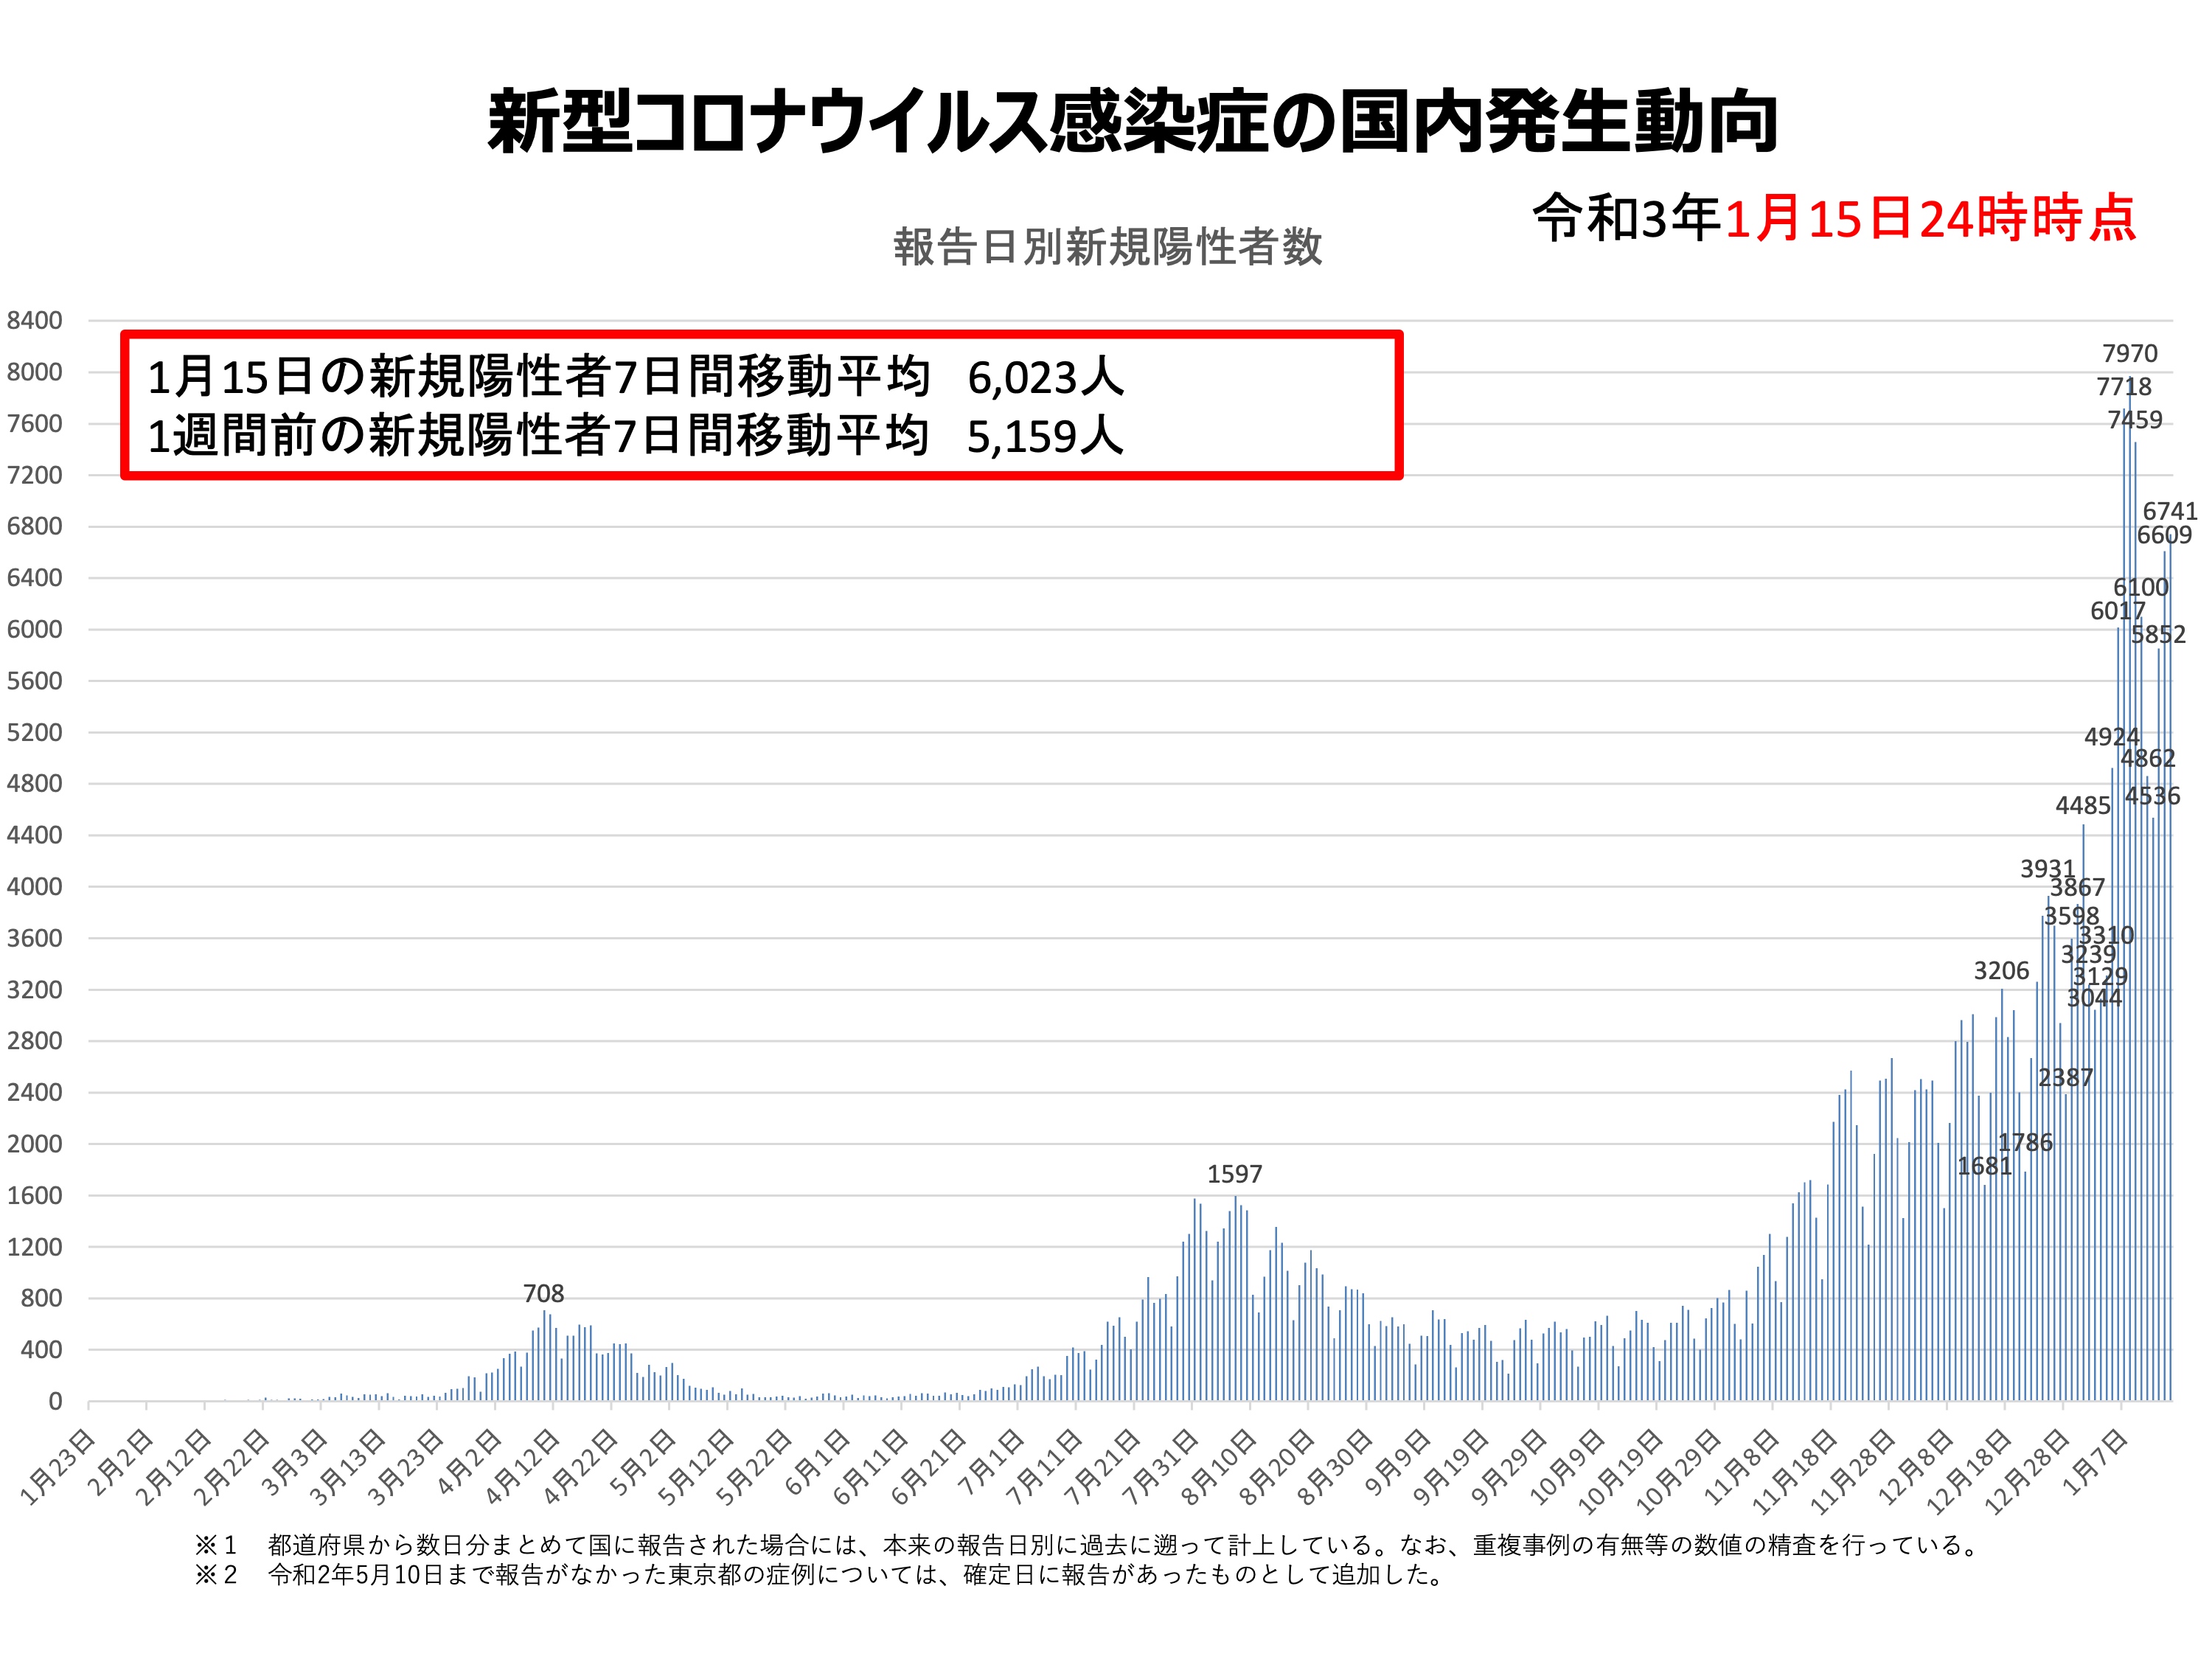 Japan in der 3. Wel­le: Die täg­li­chen Covid-19-Fäl­le seit Janu­ar 2020